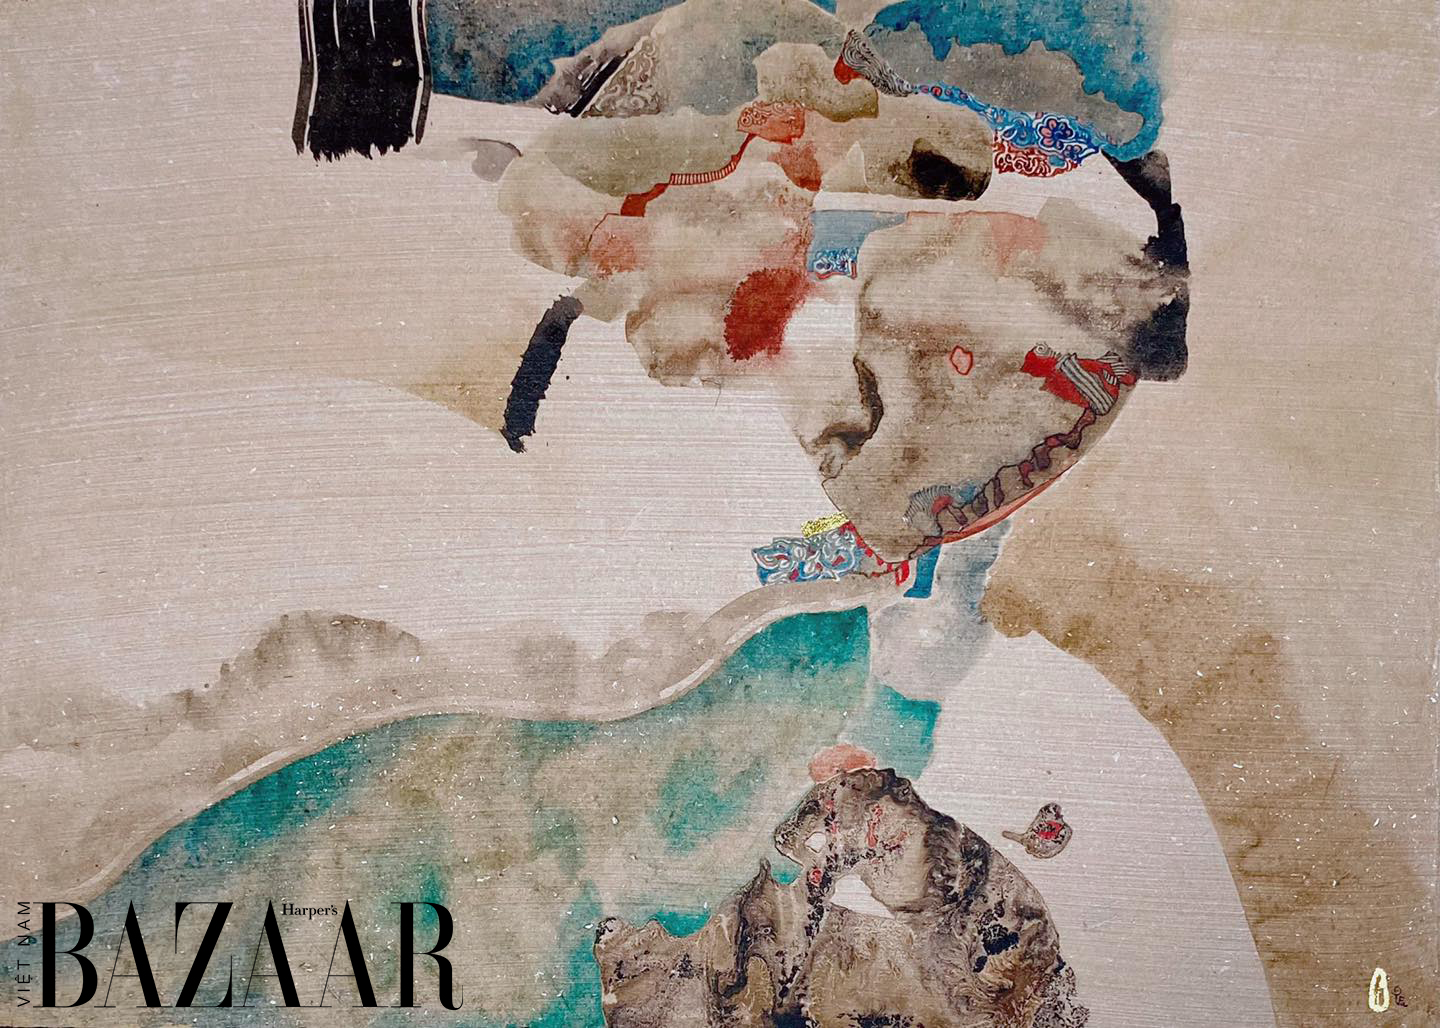 Harper's Bazaar_Exceptions Mifa Sparkling Scalloped Paper_04